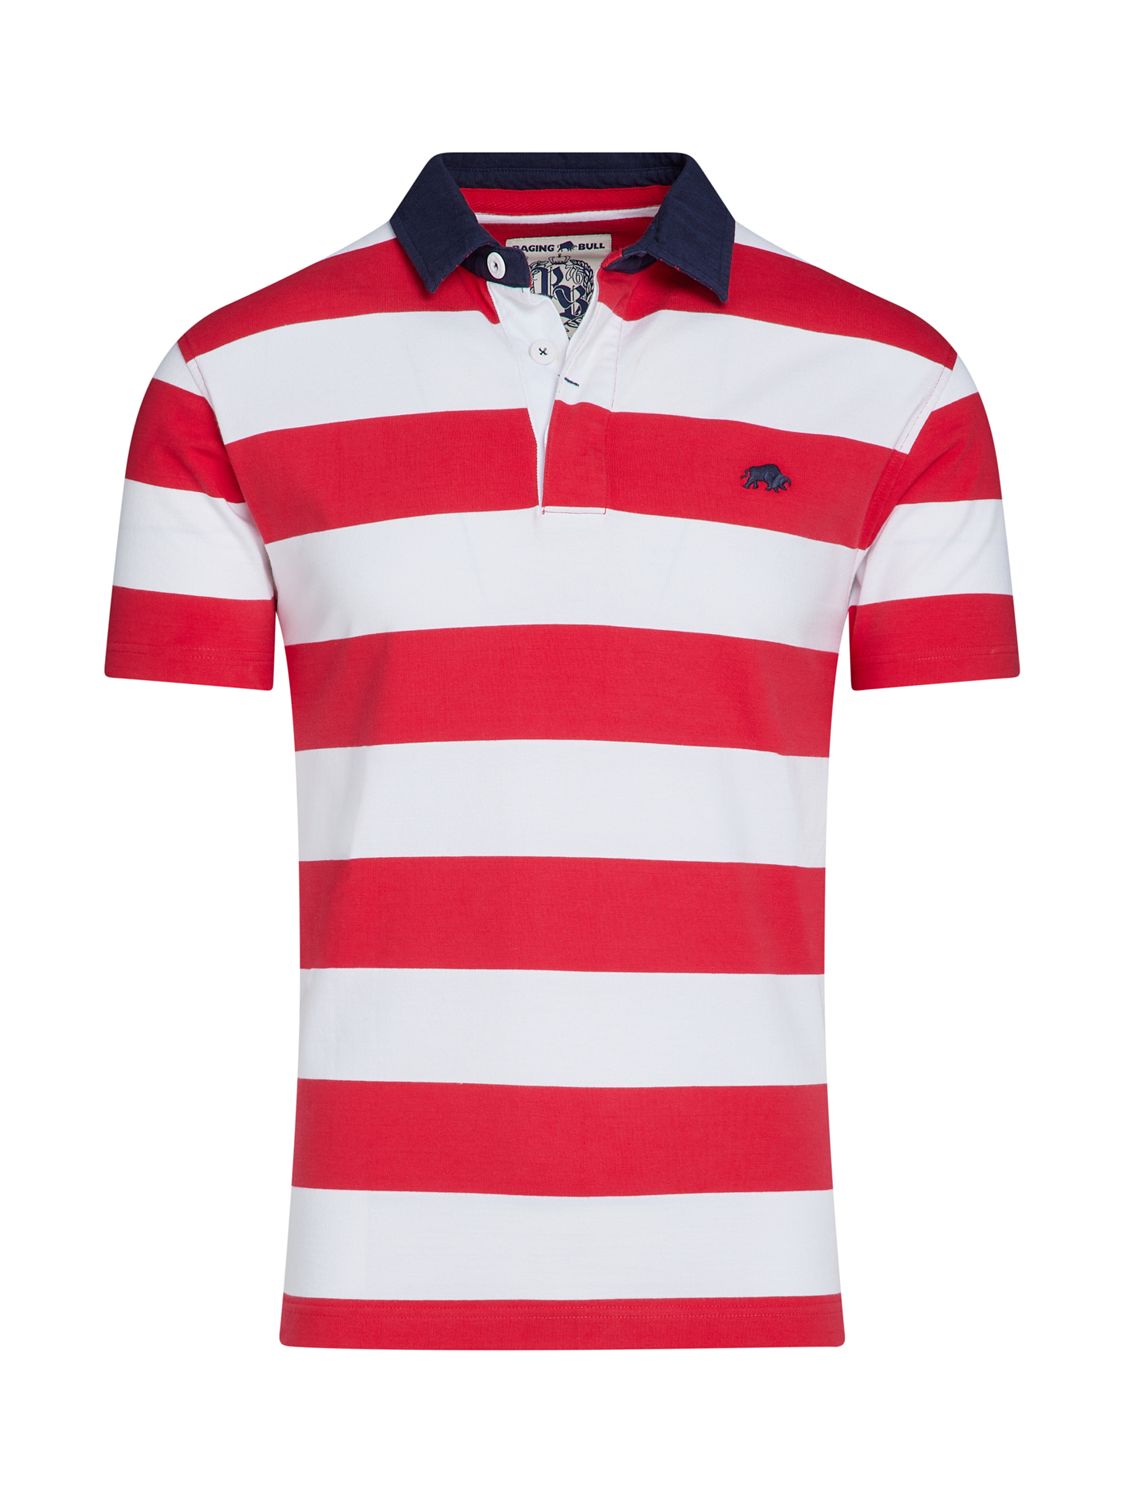 Raging Bull Short Sleeve Hooped Rugby Shirt, Watermelon/White, XXXXXL